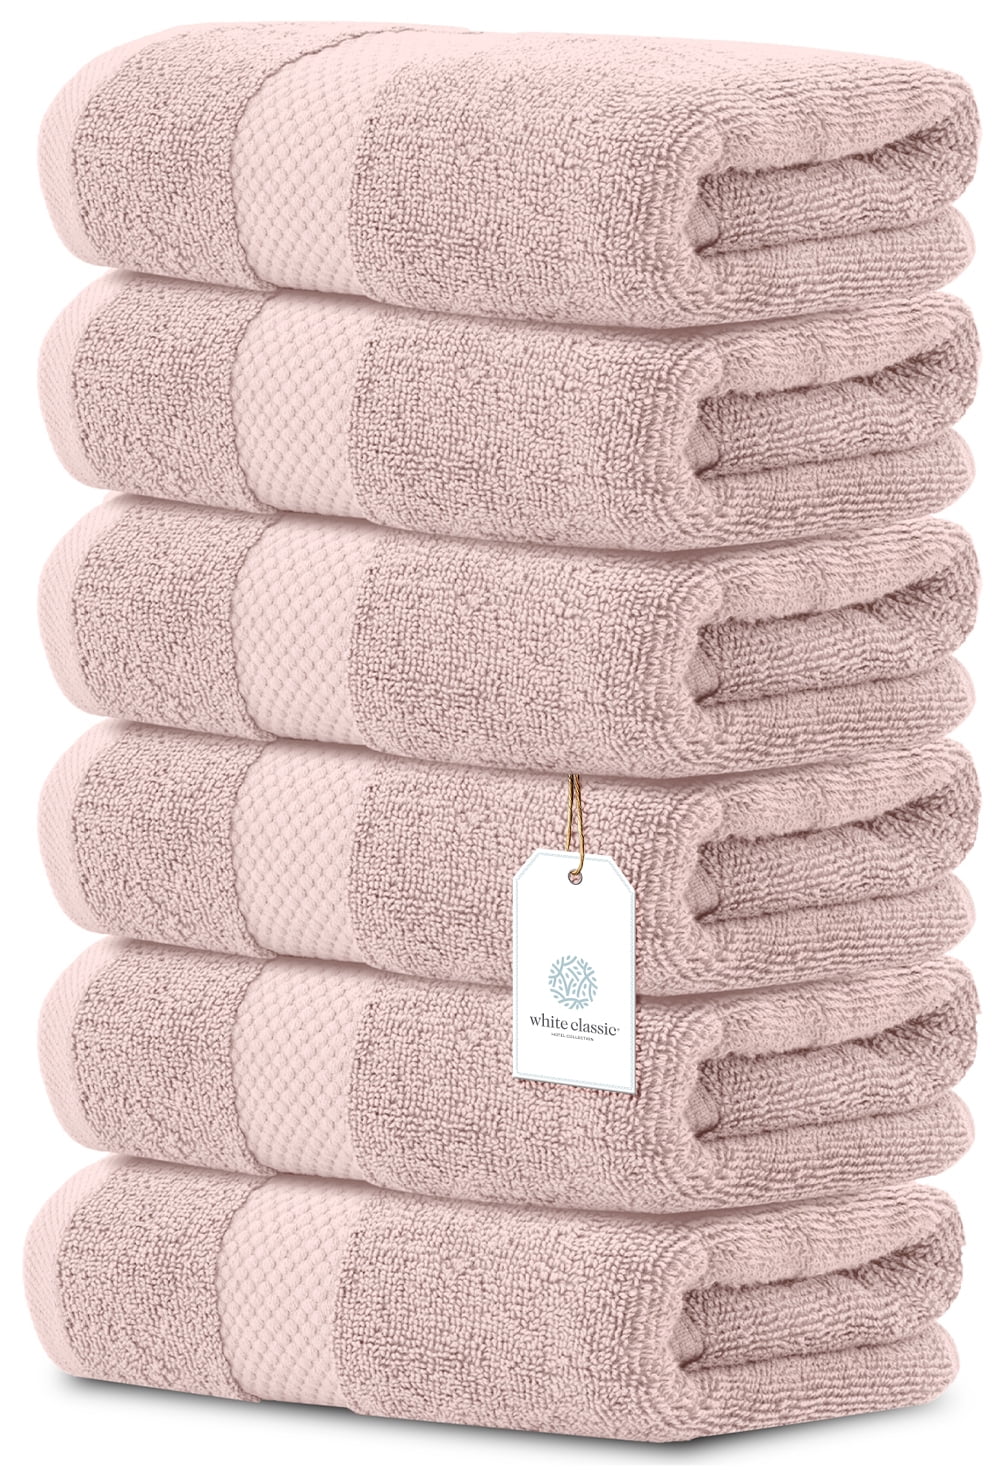 12 white 16x30 premium hand towels spa salon hotel yoga resort plush absorbent 